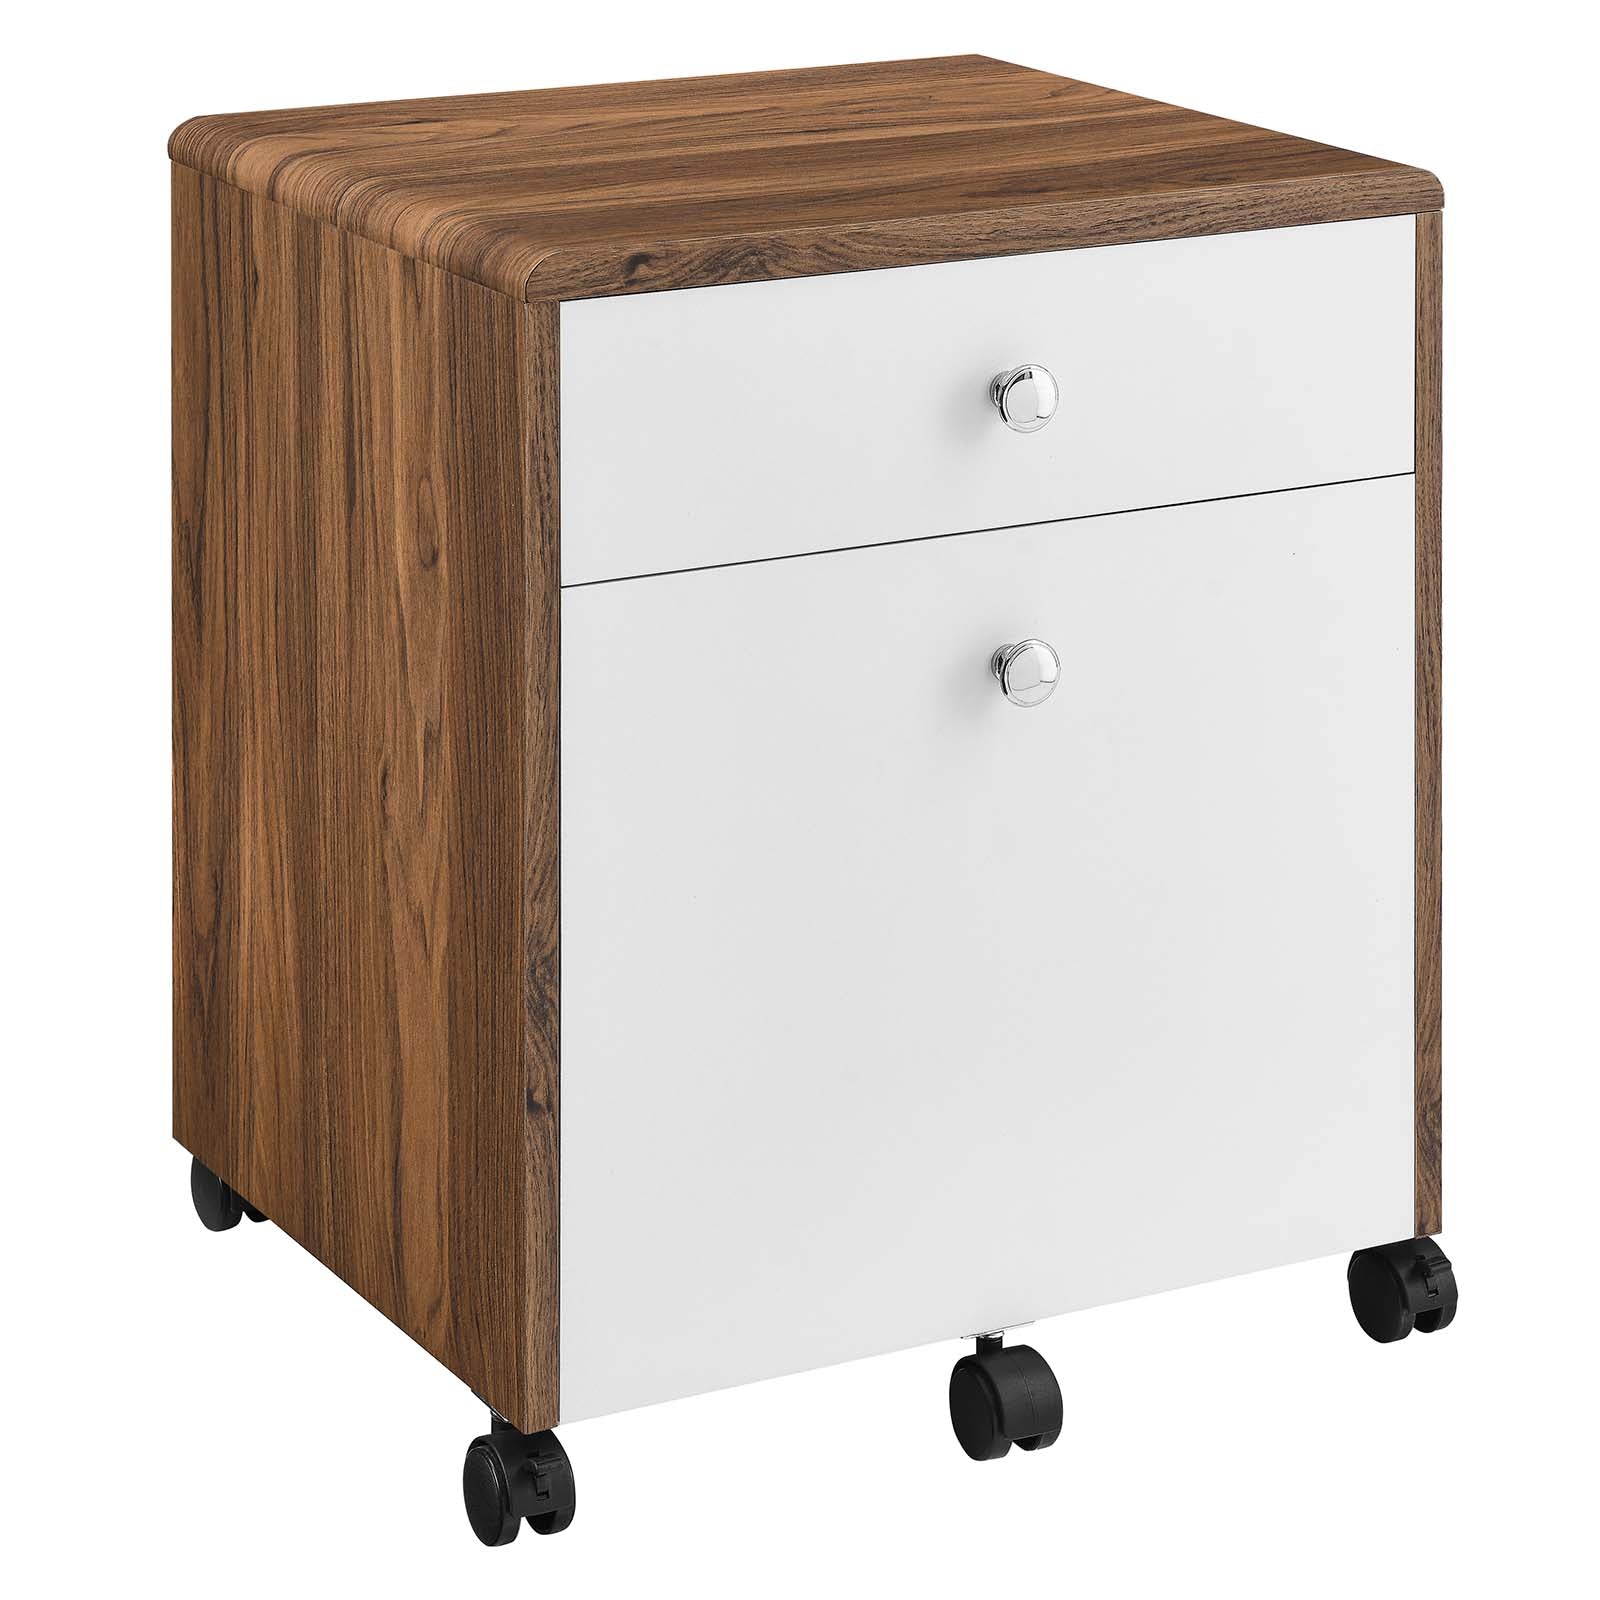 Transmit Wood Desk and File Cabinet Set - East Shore Modern Home Furnishings